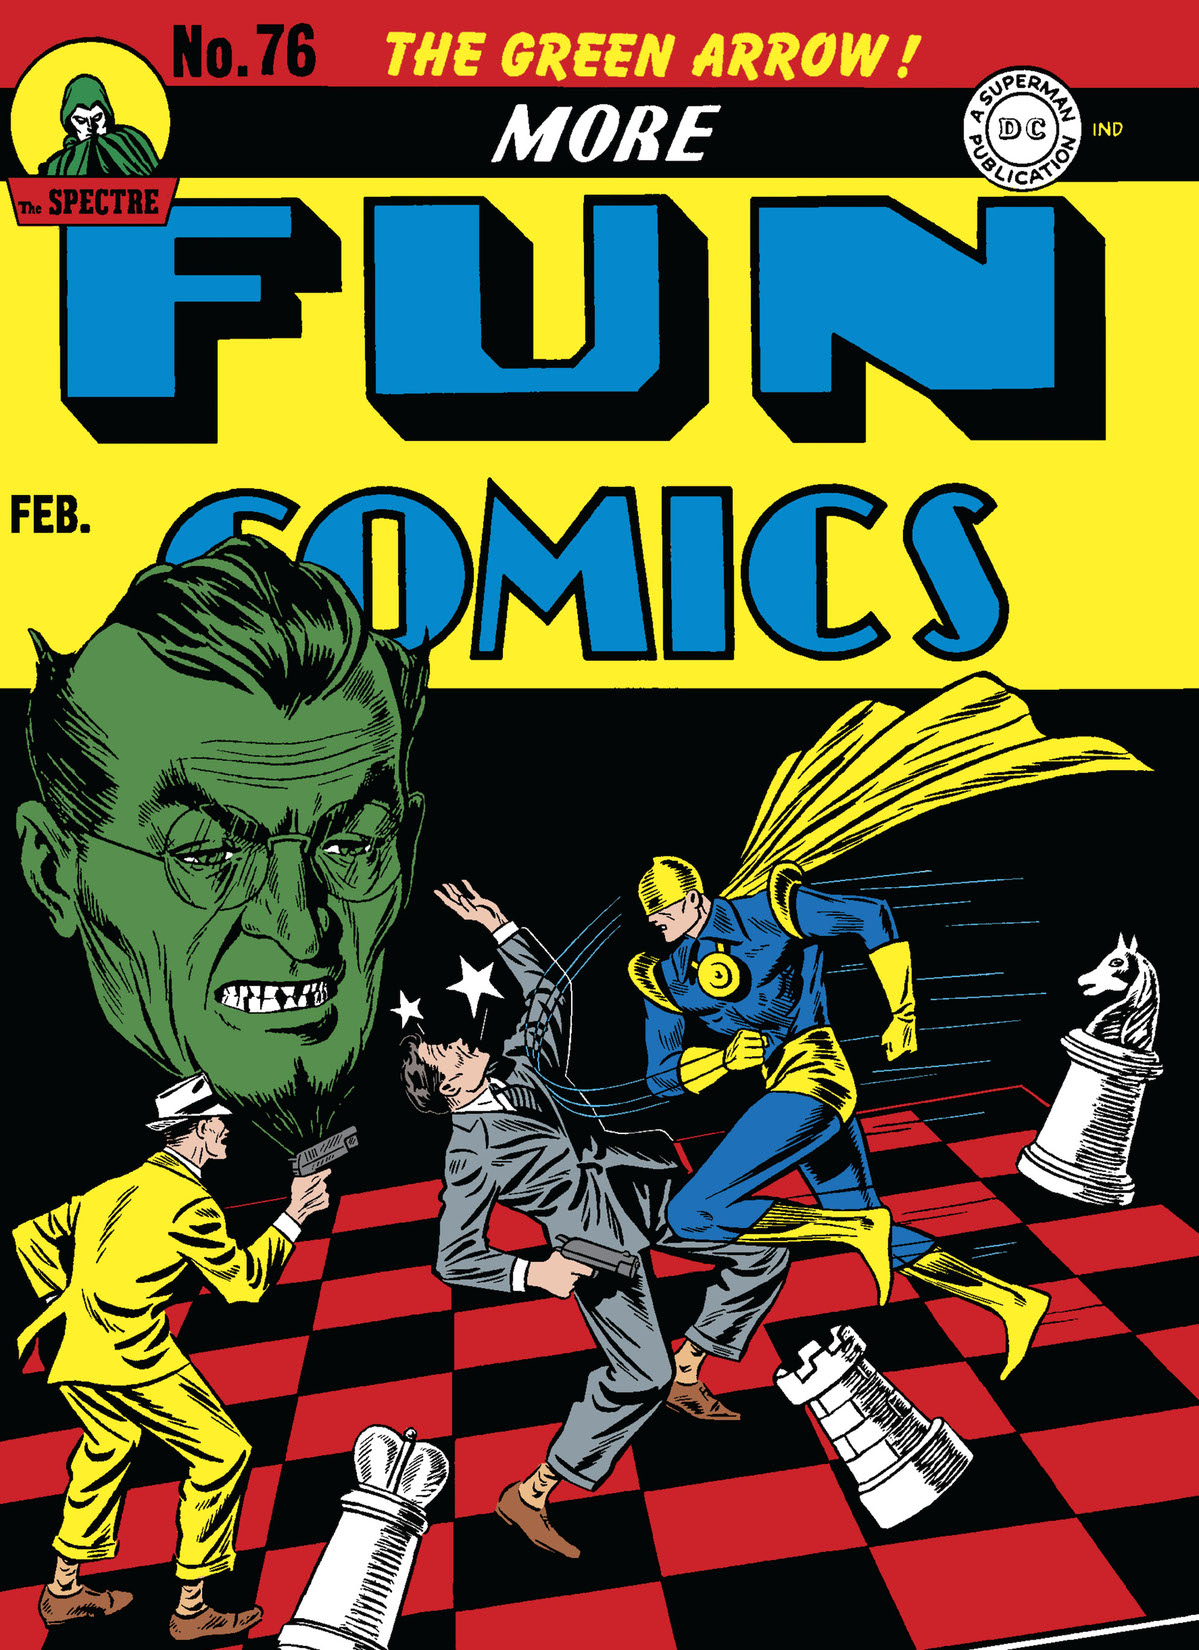 More Fun Comics #76 preview images